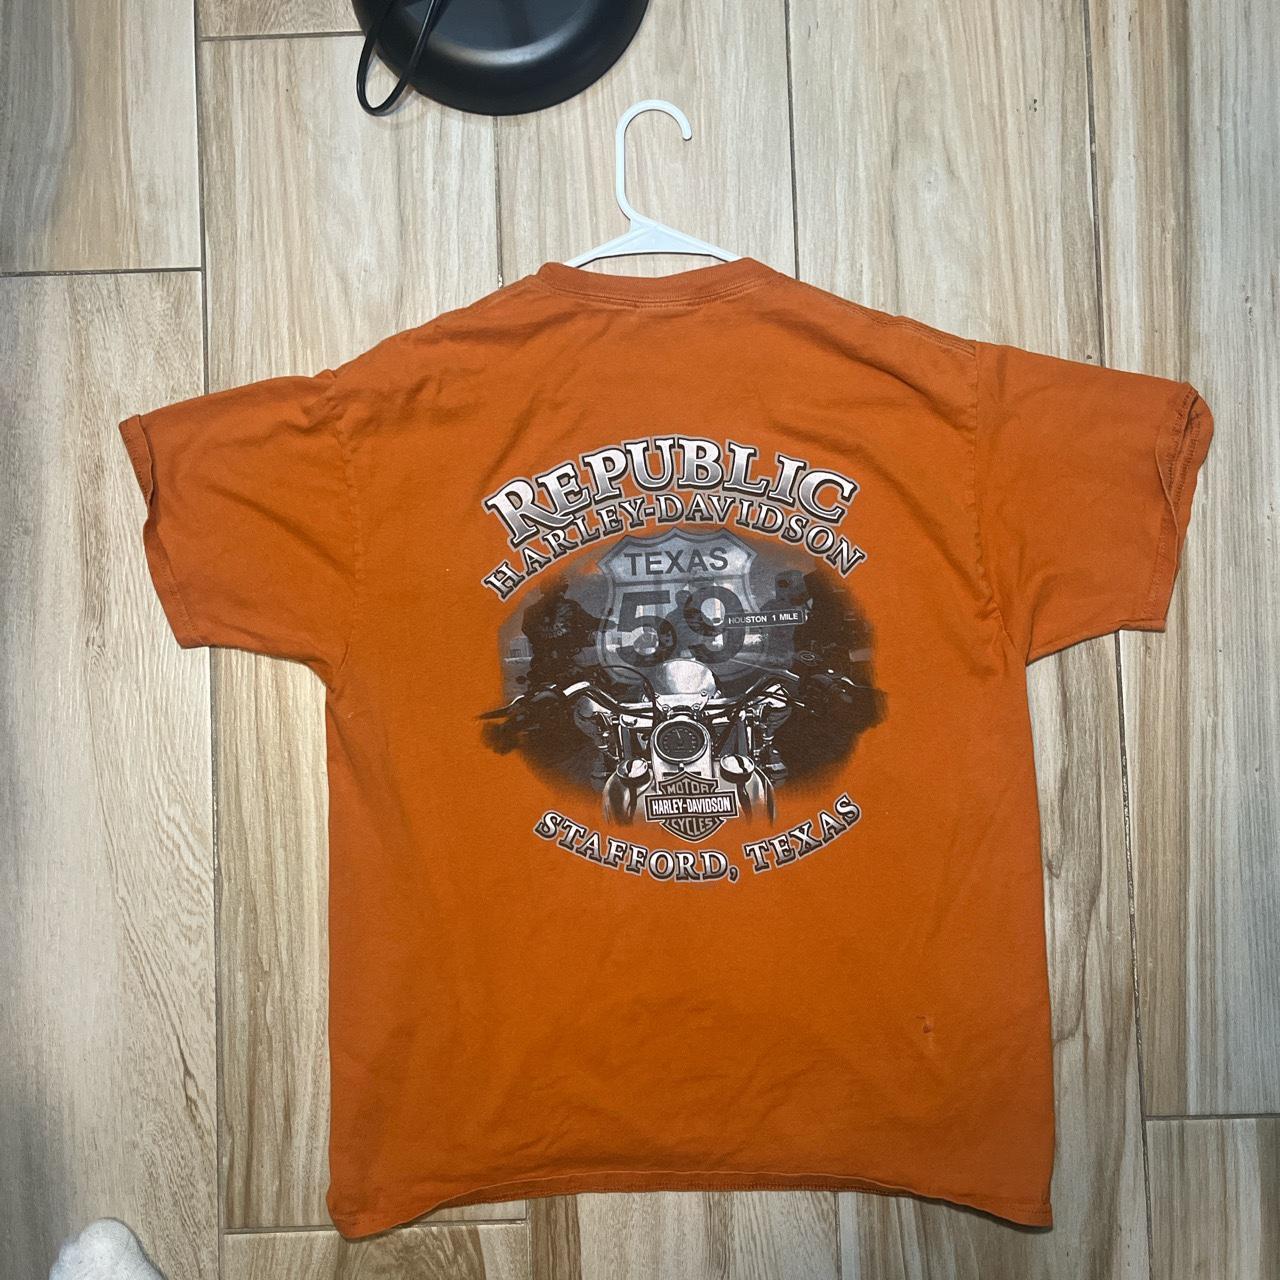 Harley Davidson Men's Orange T-shirt (2)